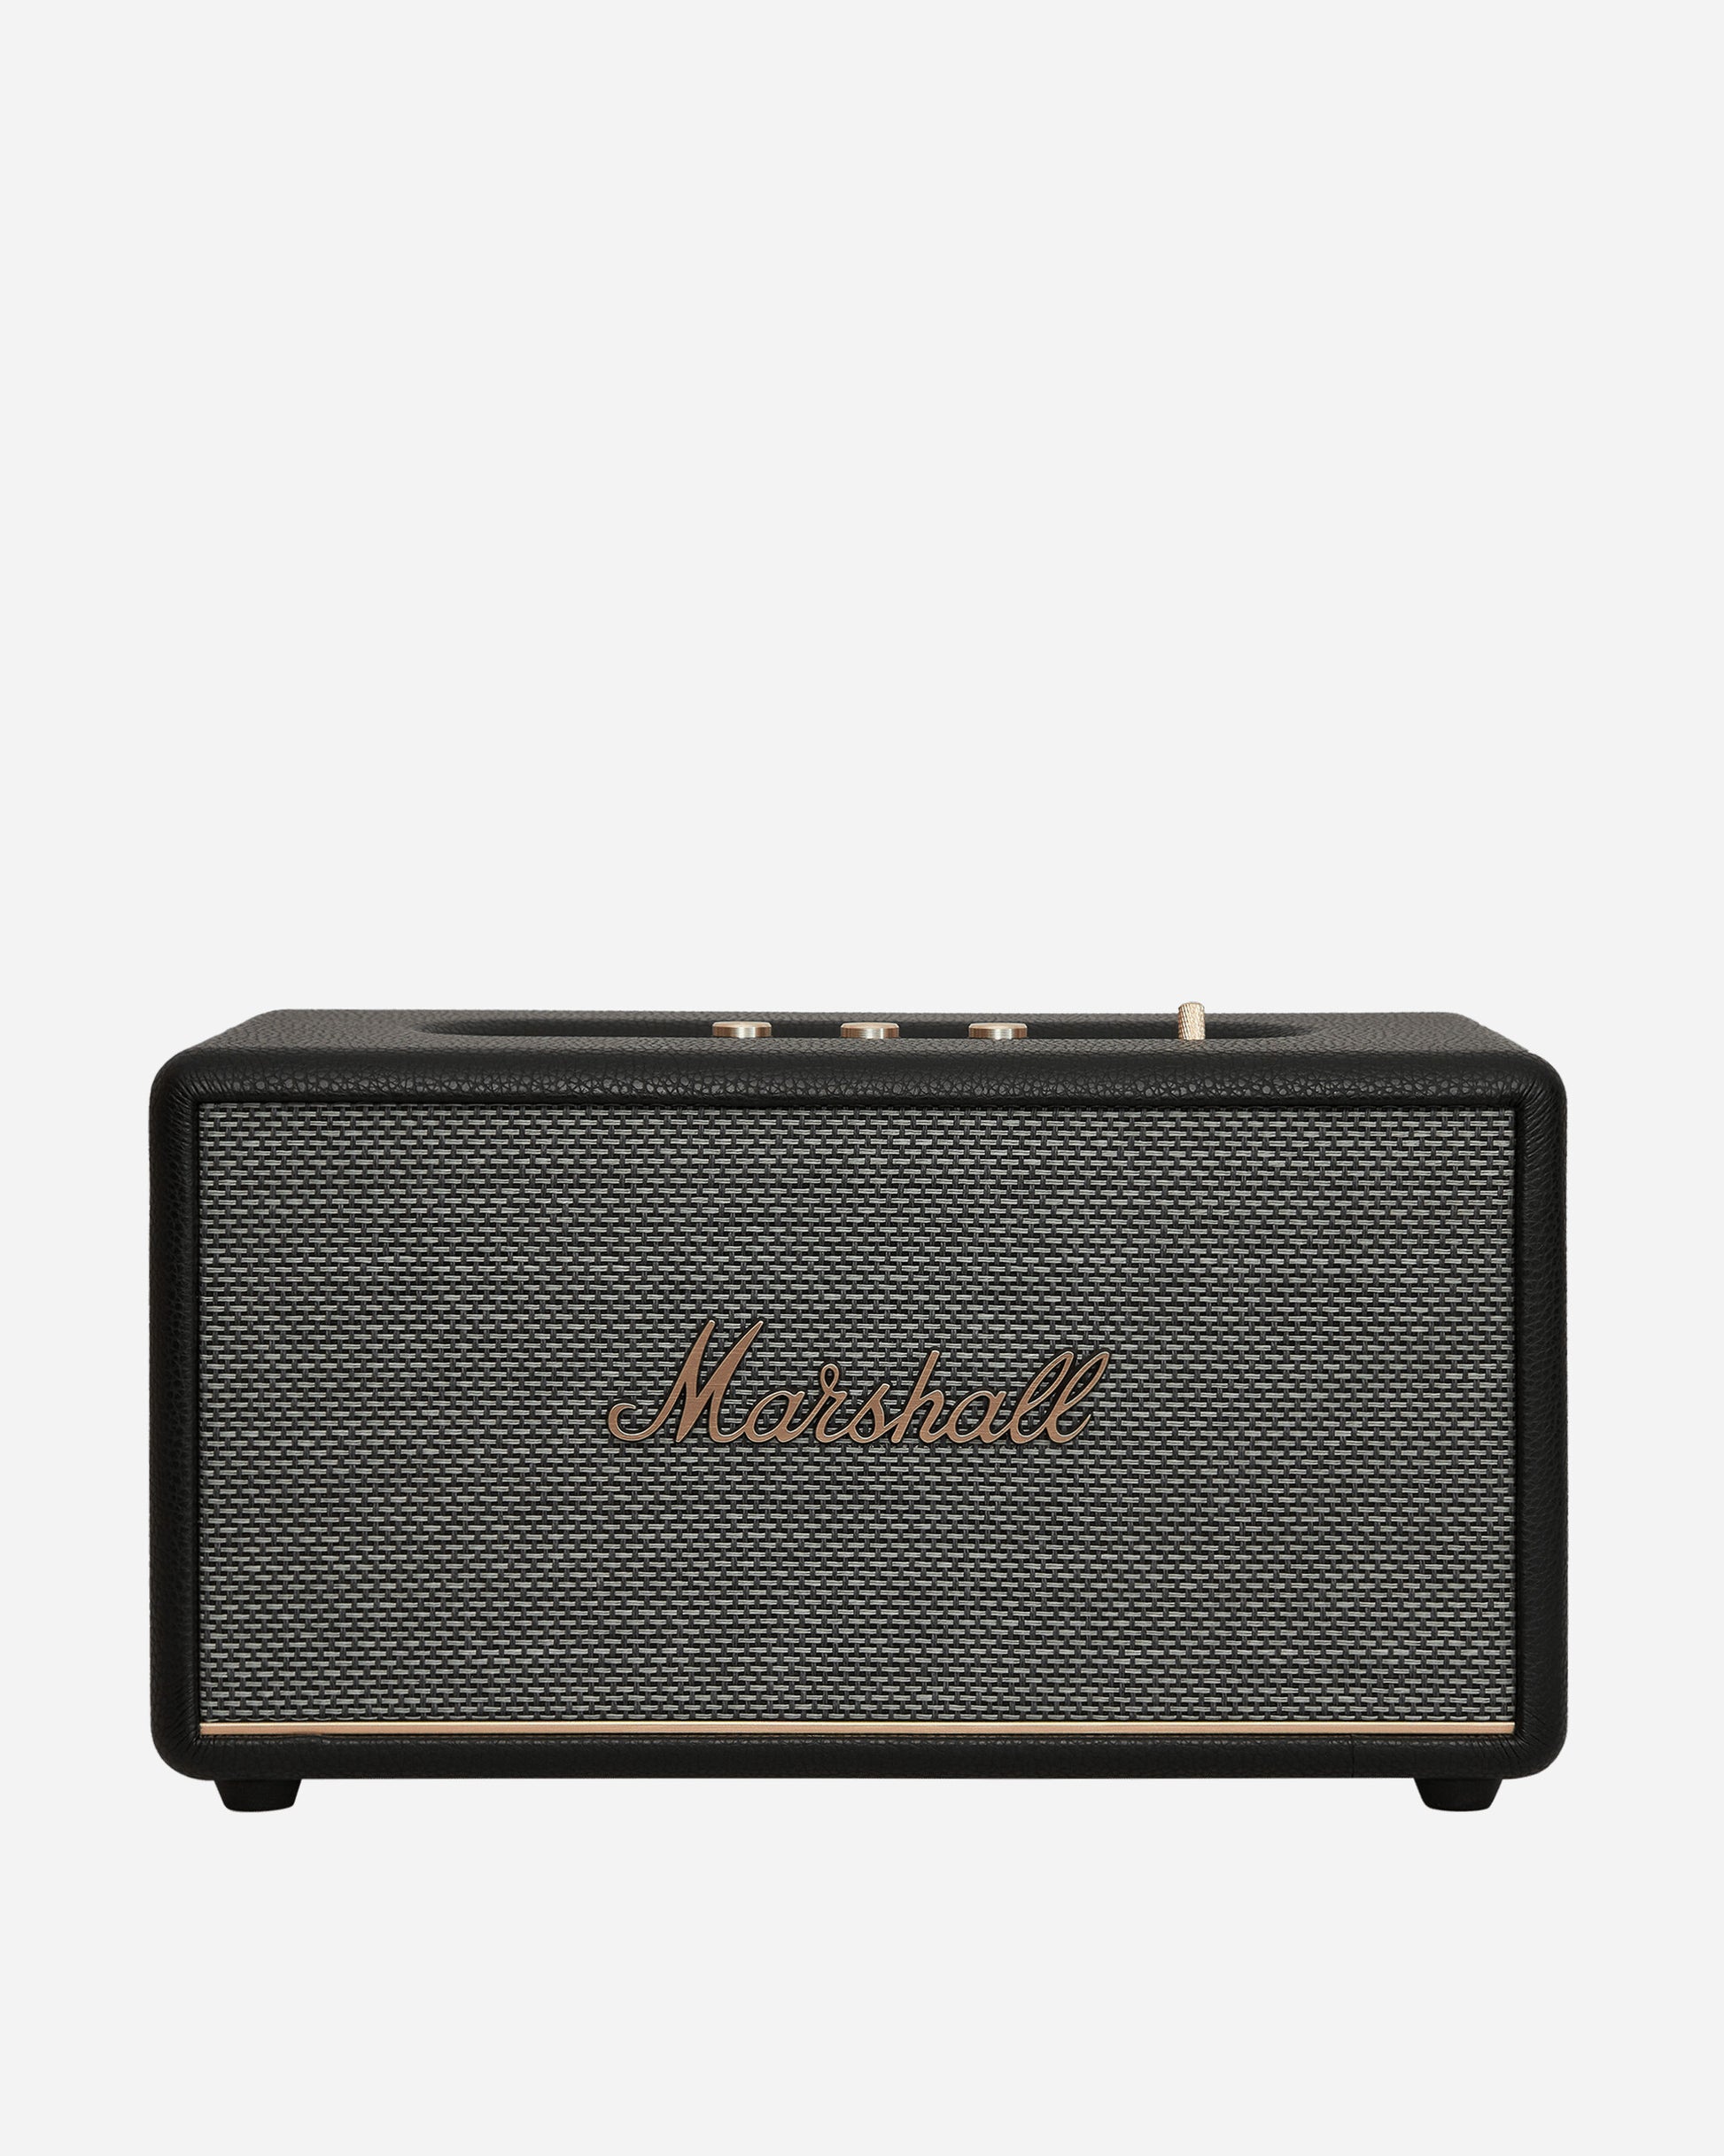 Marshall Marshall Stanmore Iii Bt Black Tech and Audio Speakers 1006010 001